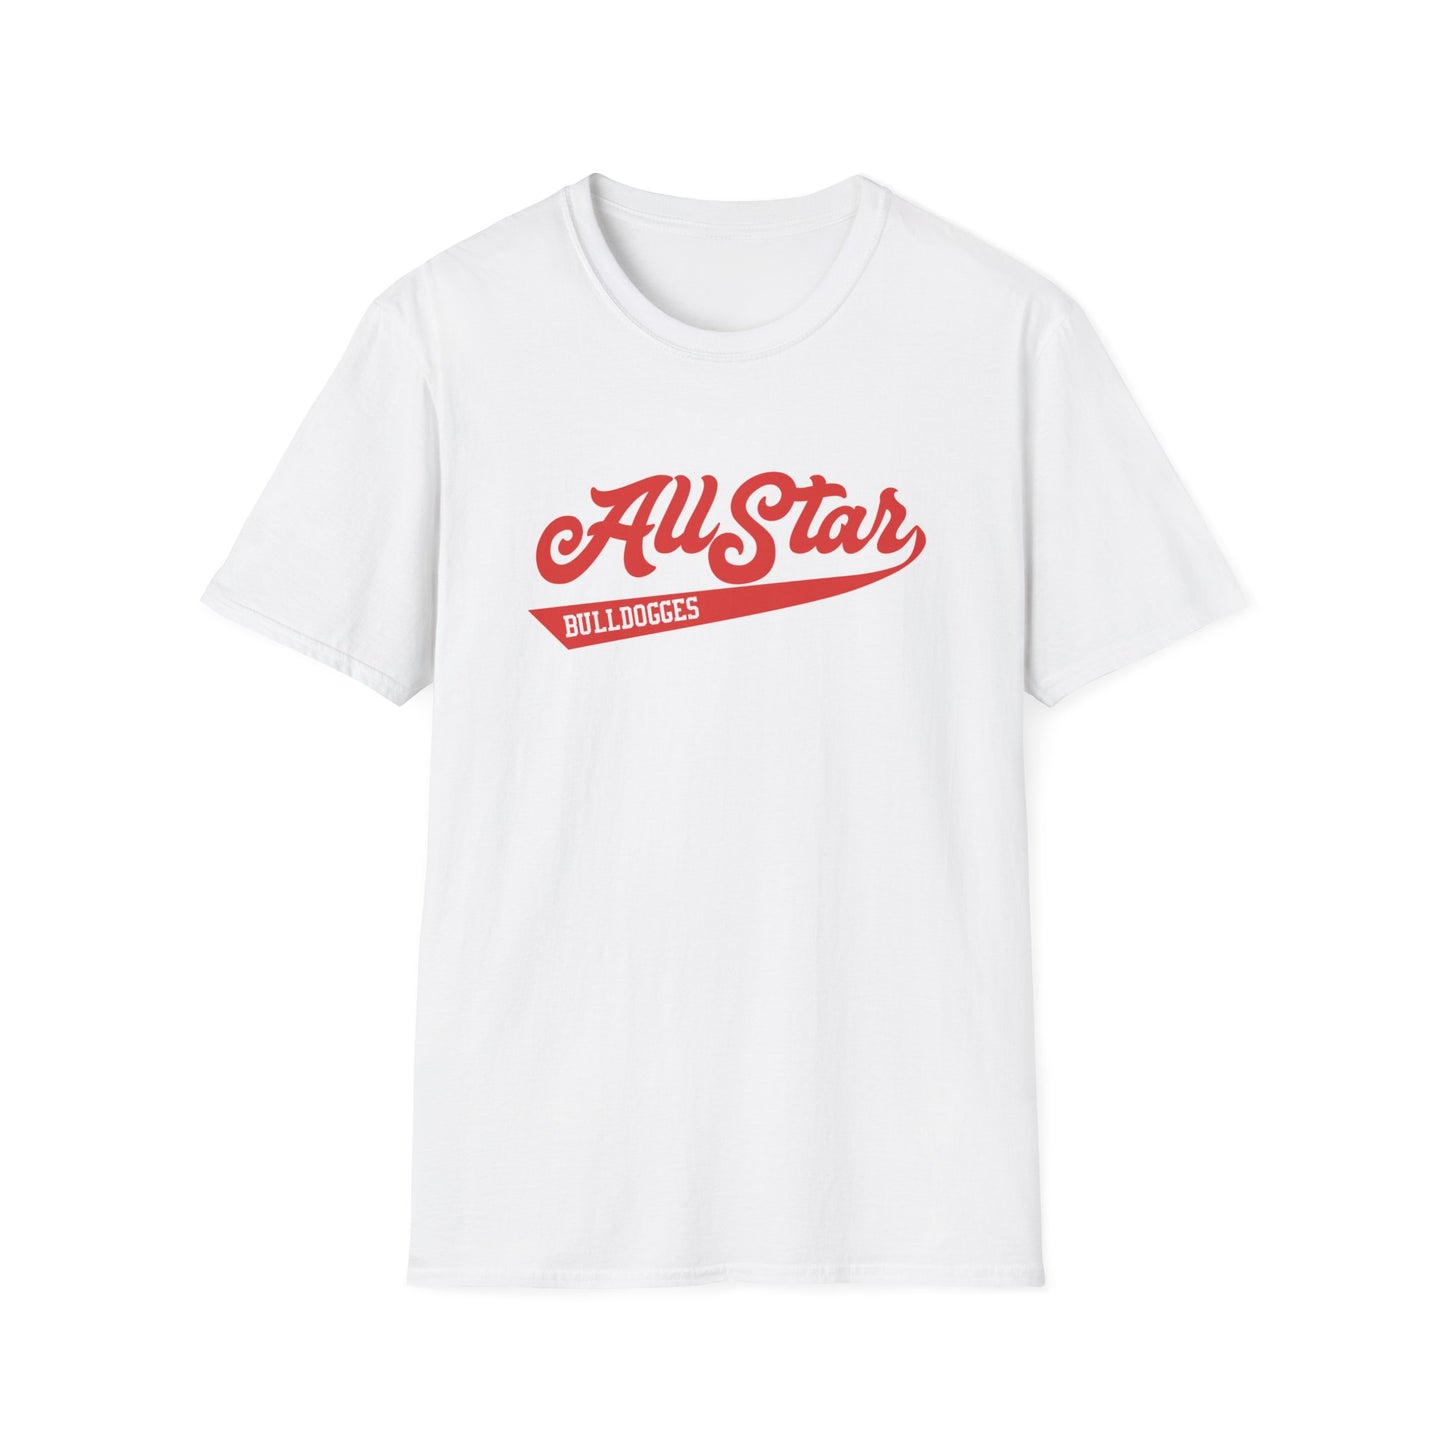 ‘Rocket Red’ Logo Unisex T-Shirt